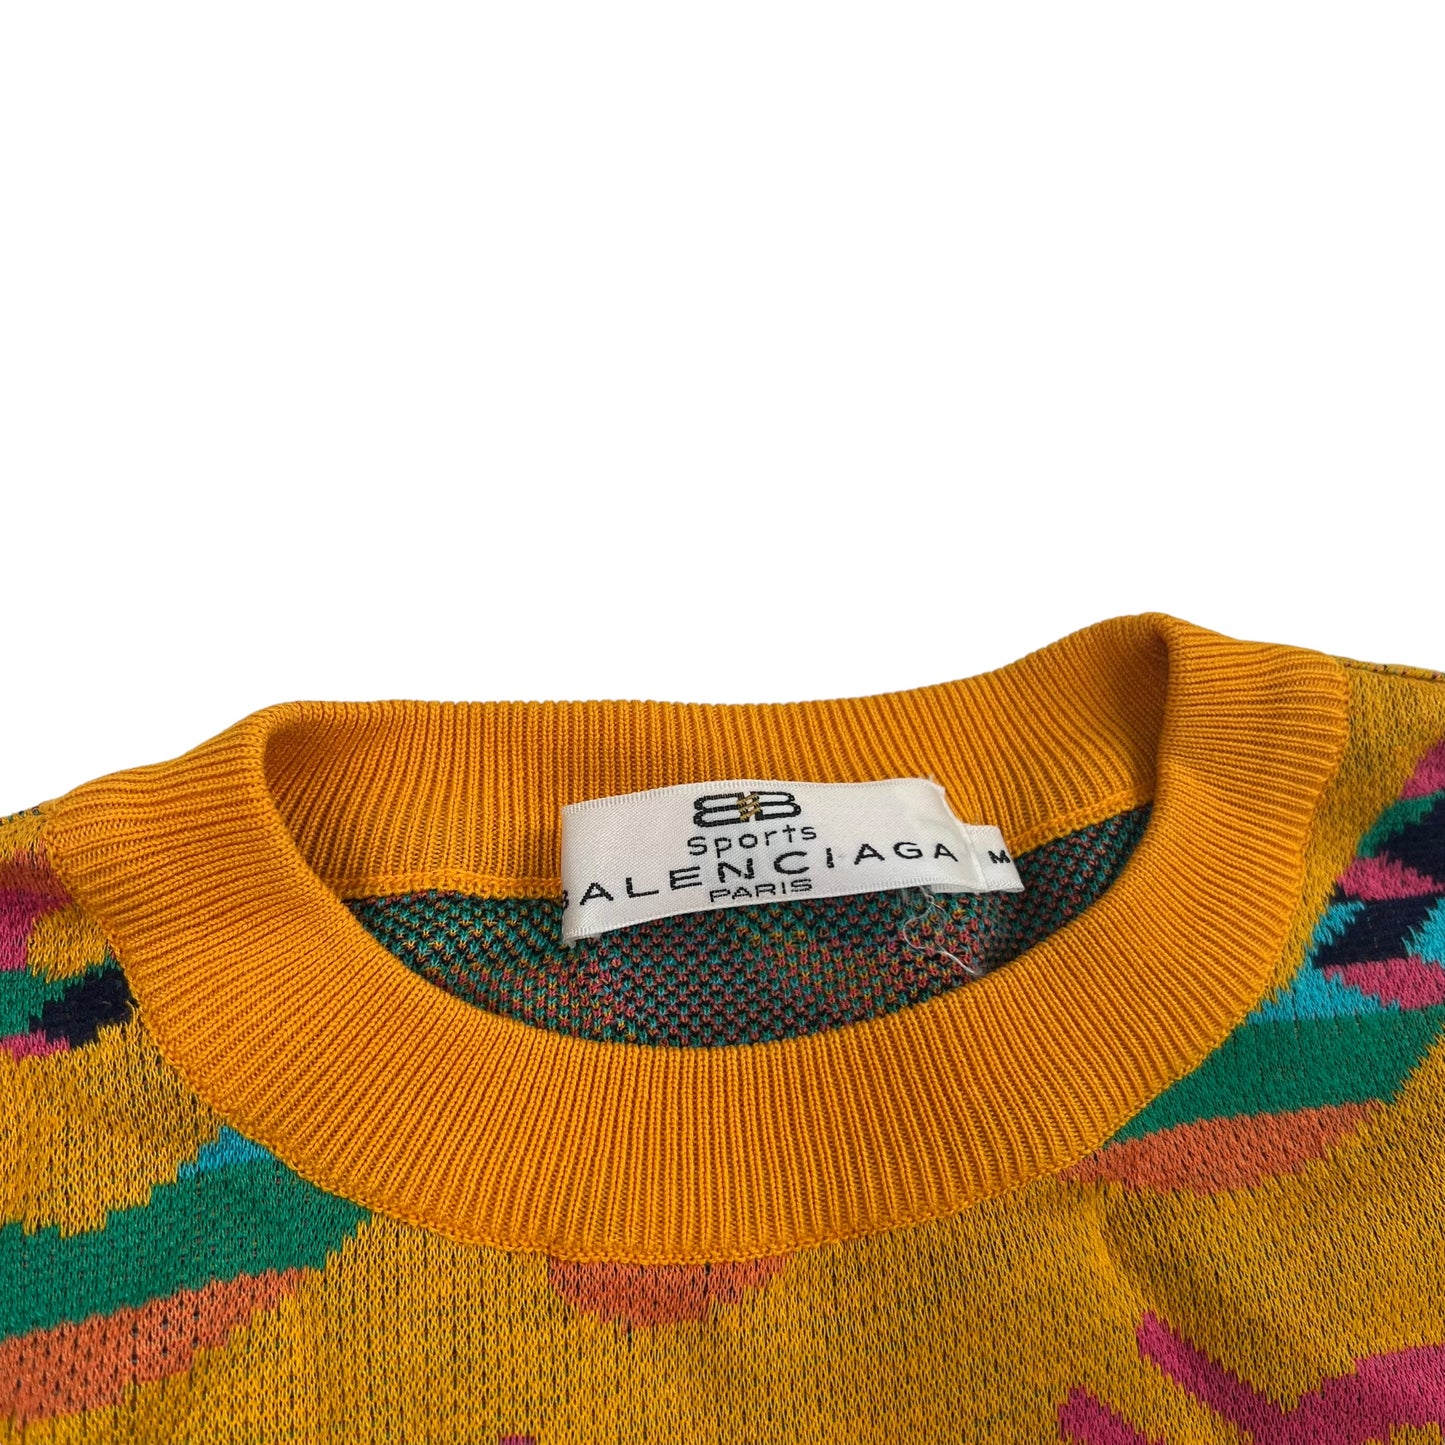 Vintage Balenciaga Sports Knit Sweater - Women M